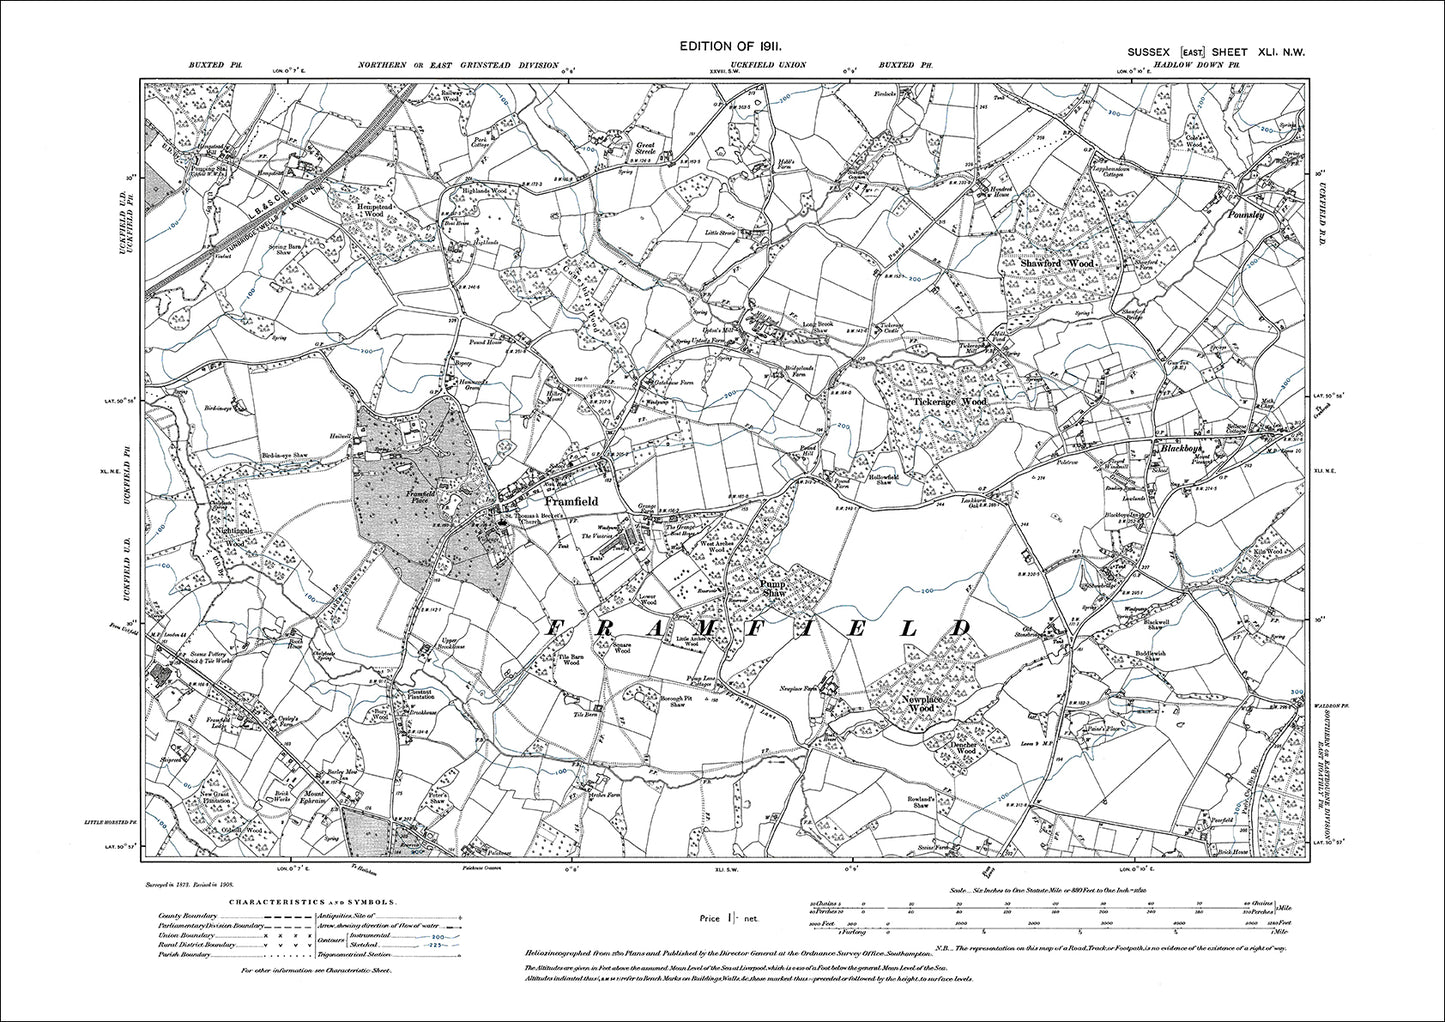 Framfield, Blackboys, Pounsley, old map Sussex 1911: 41NW